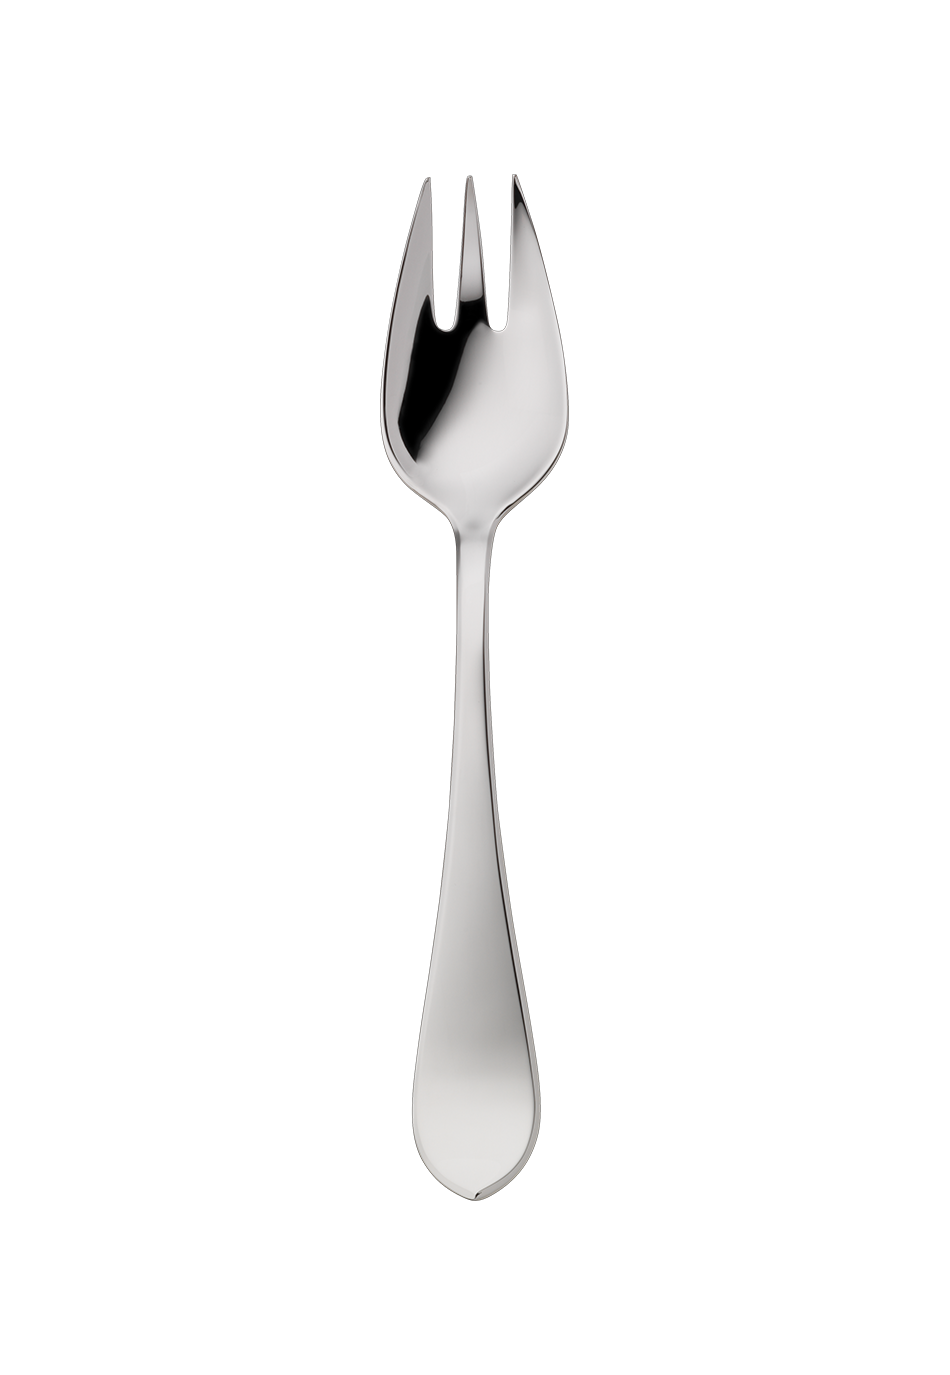 Eclipse Vegetable Fork (150g massive silverplated)